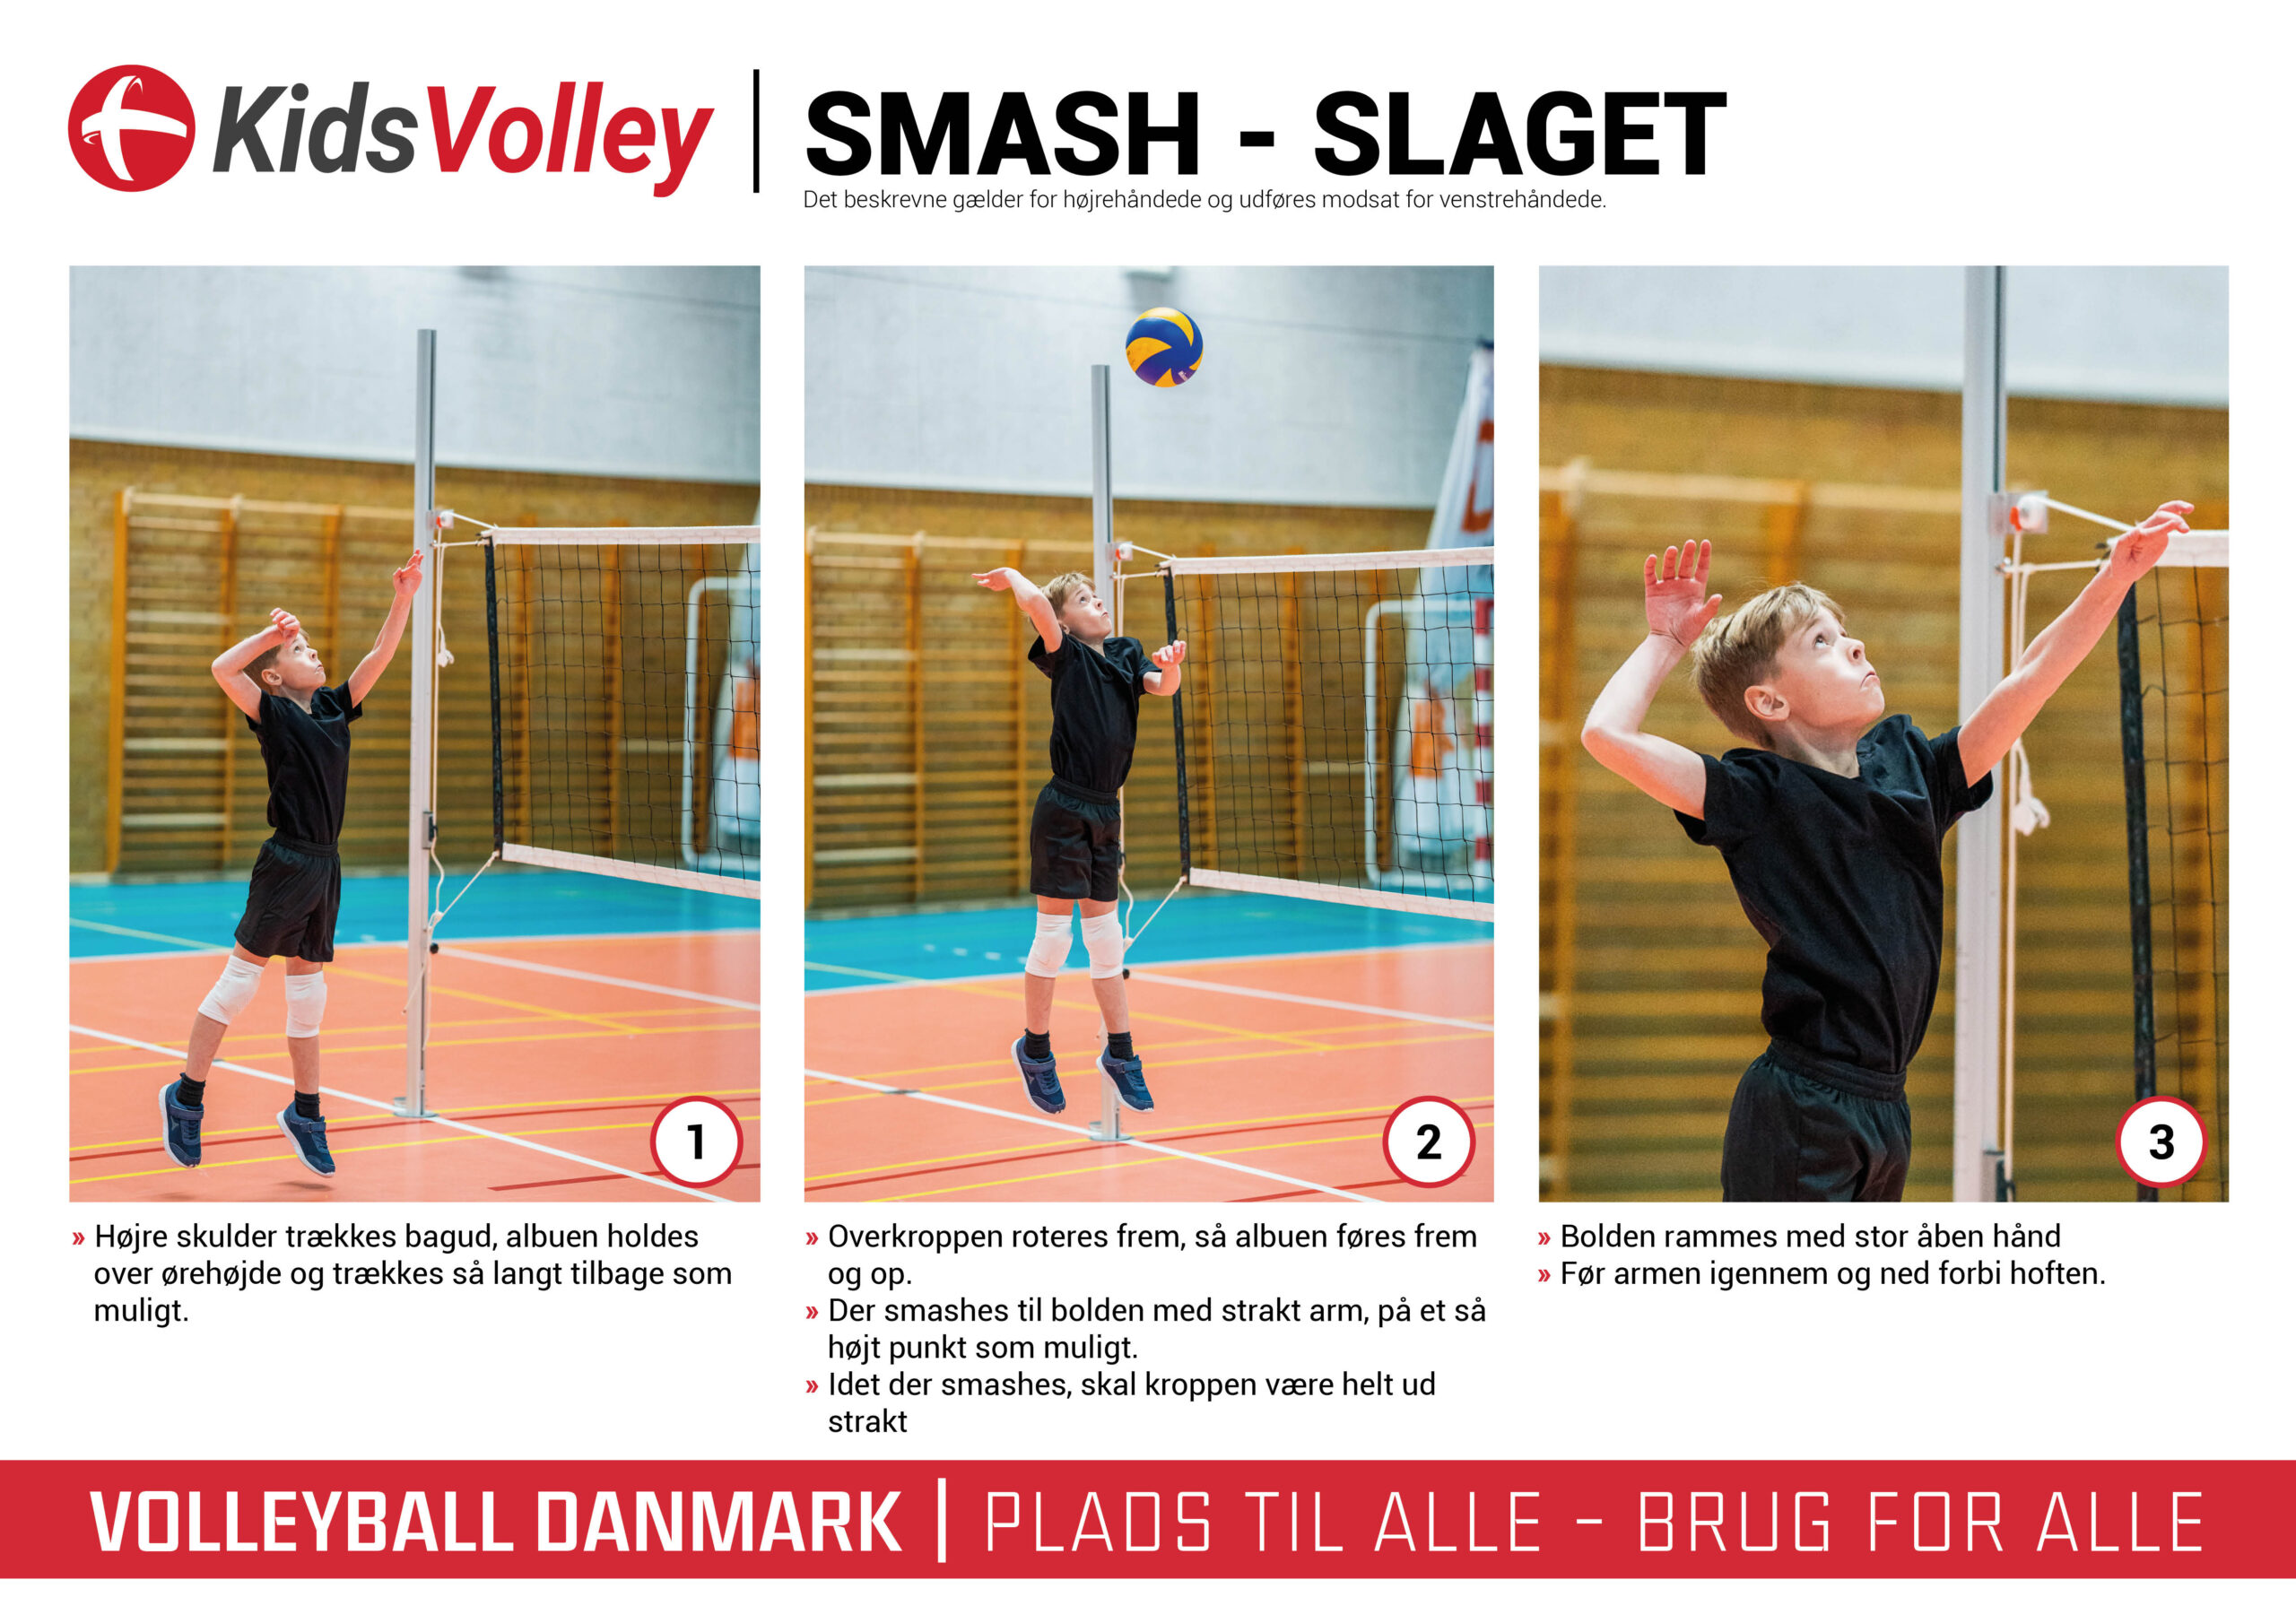 - kidsvolley - Volleyball Danmark